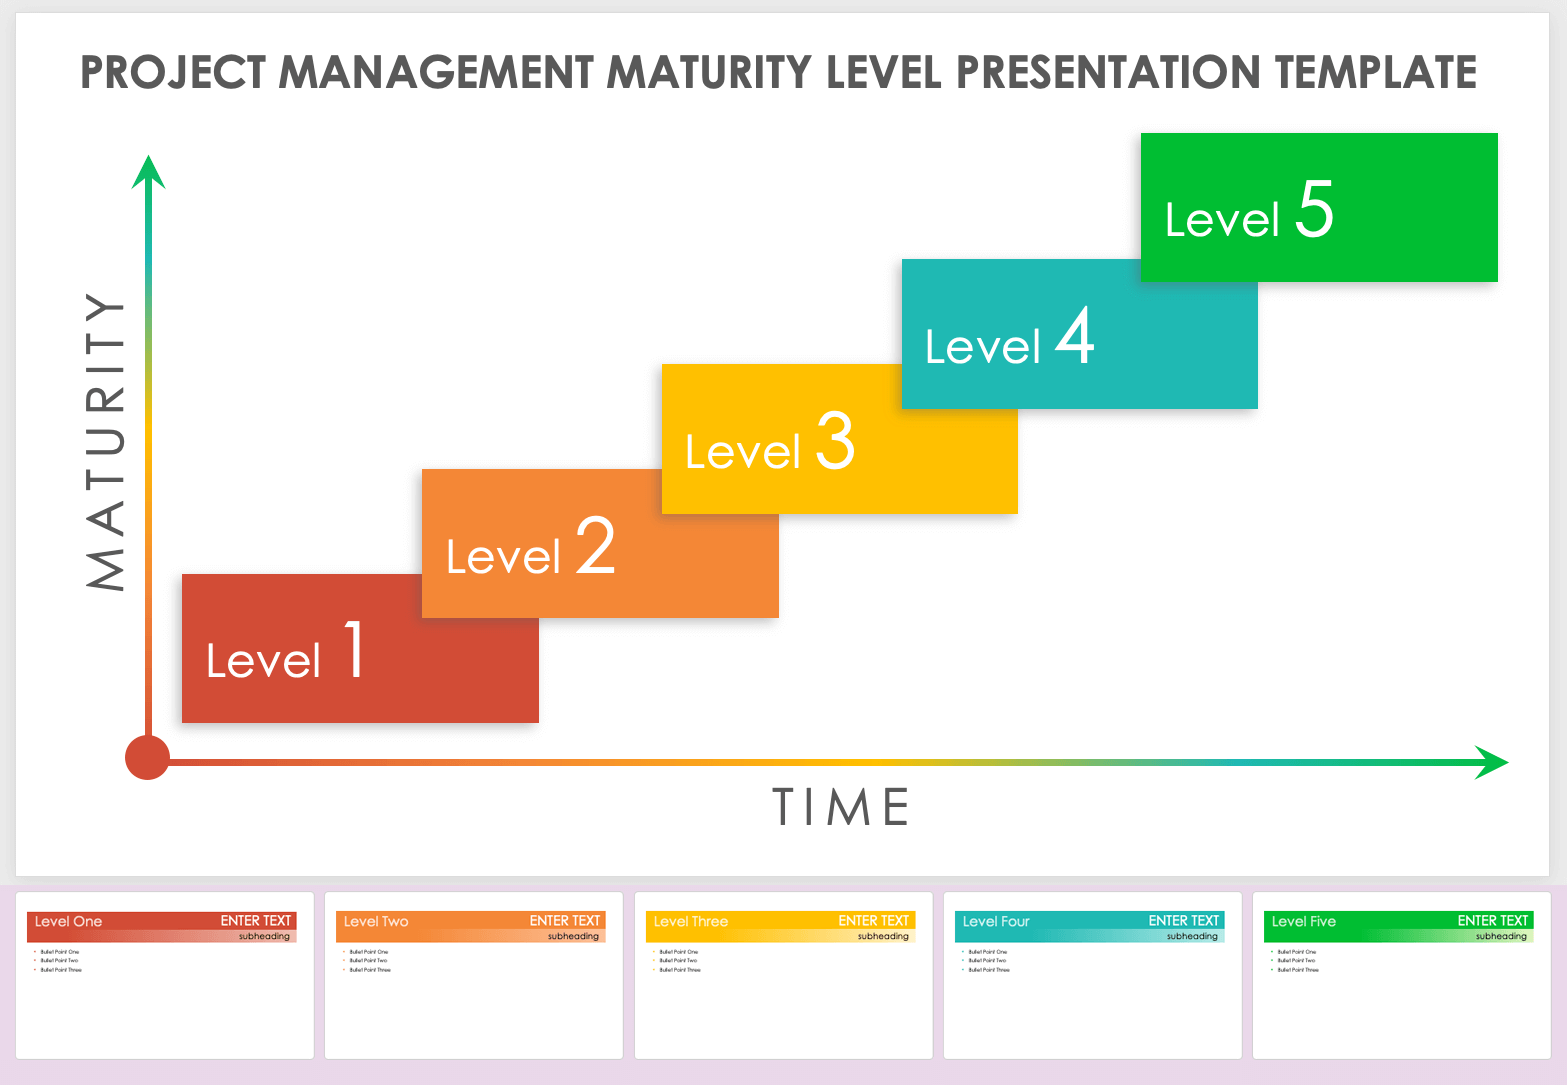 Project Management Maturity Level Presentation Template